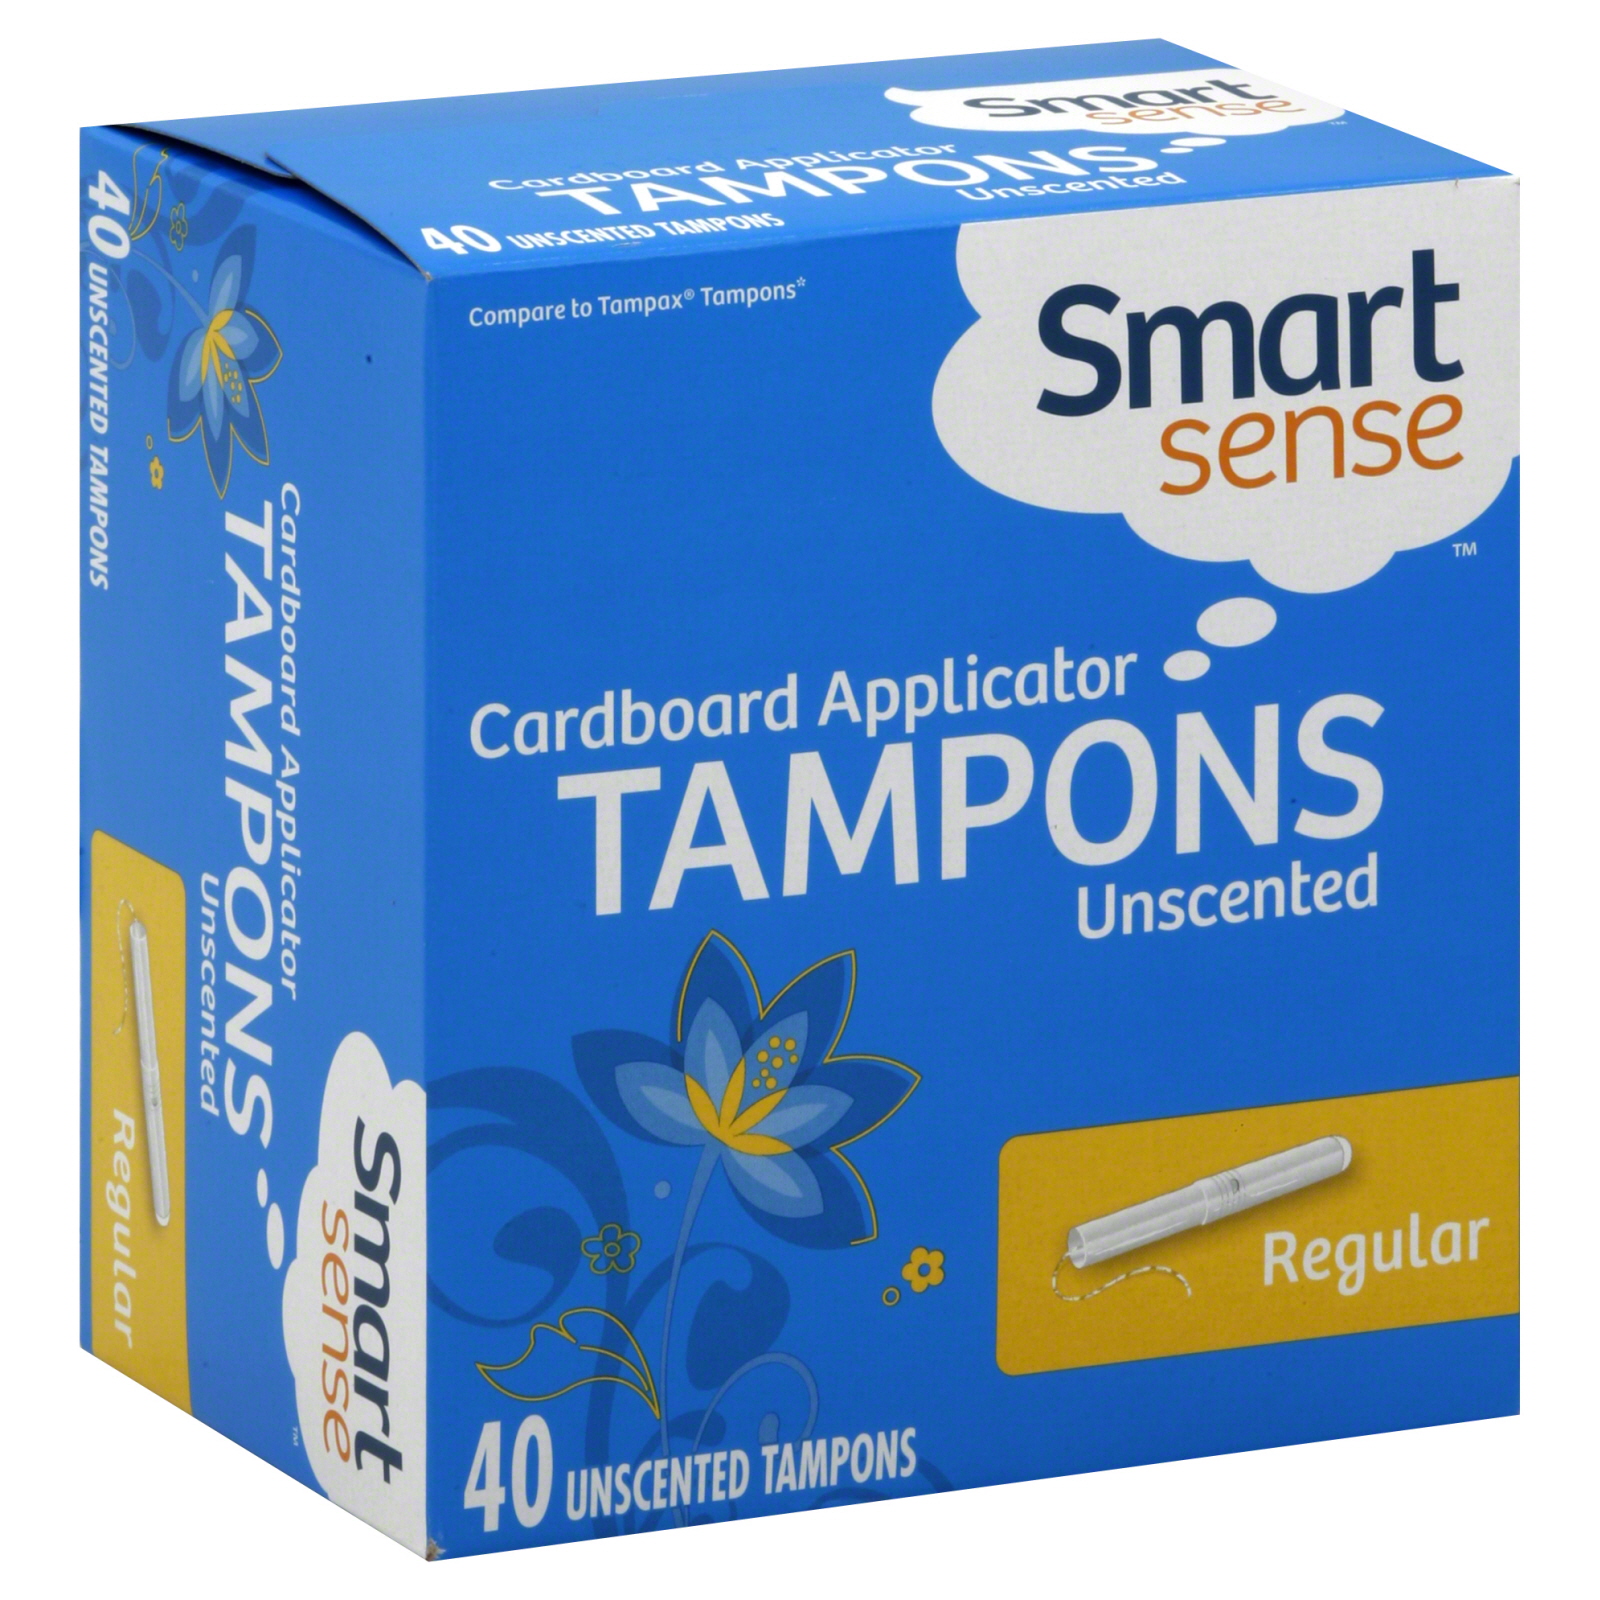 Smart Sense Tampons, Cardboard Applicator, Regular, Unscented, 40 tampons